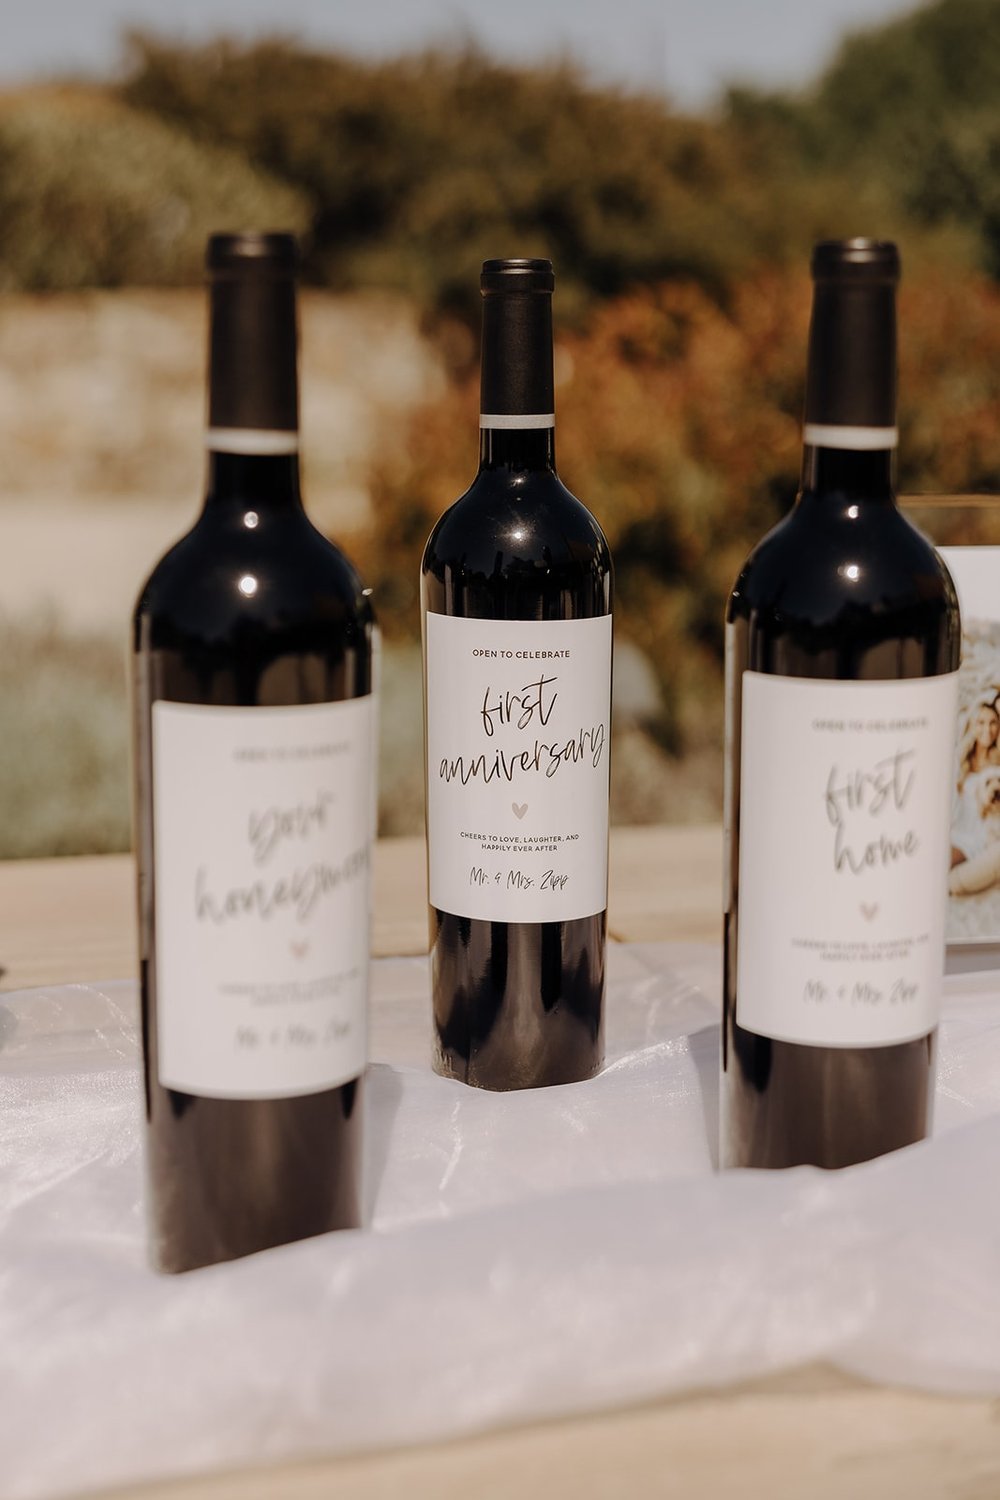 Customized wine bottles for wedding